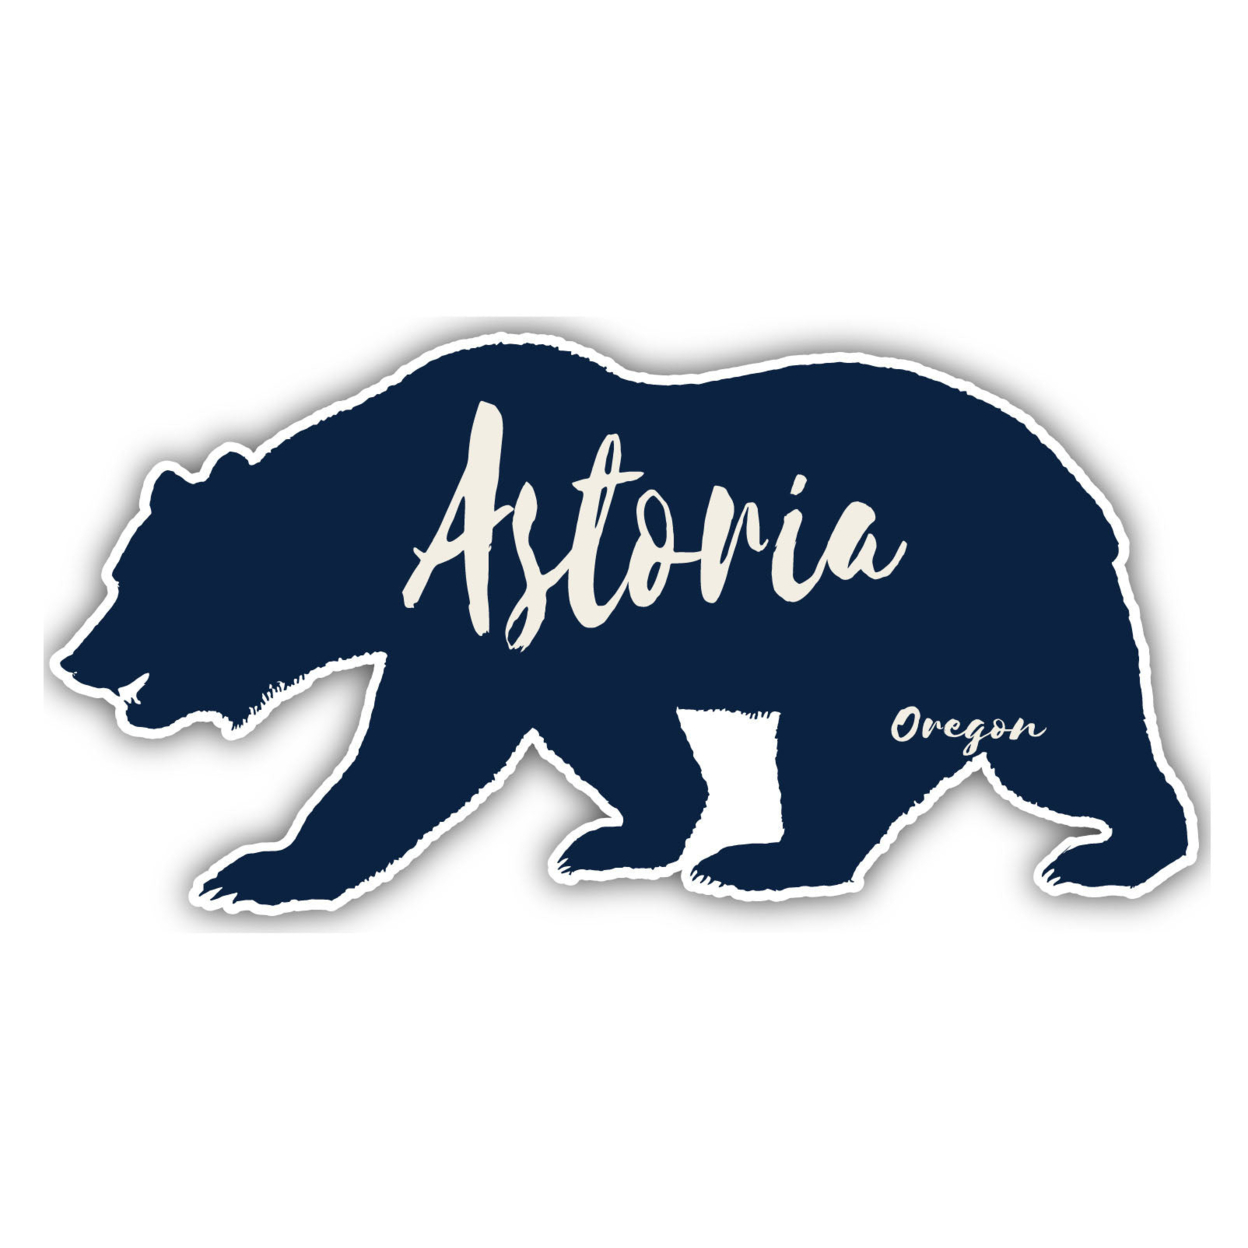 Astoria Oregon Souvenir Decorative Stickers (Choose Theme And Size) - Single Unit, 12-Inch, Camp Life